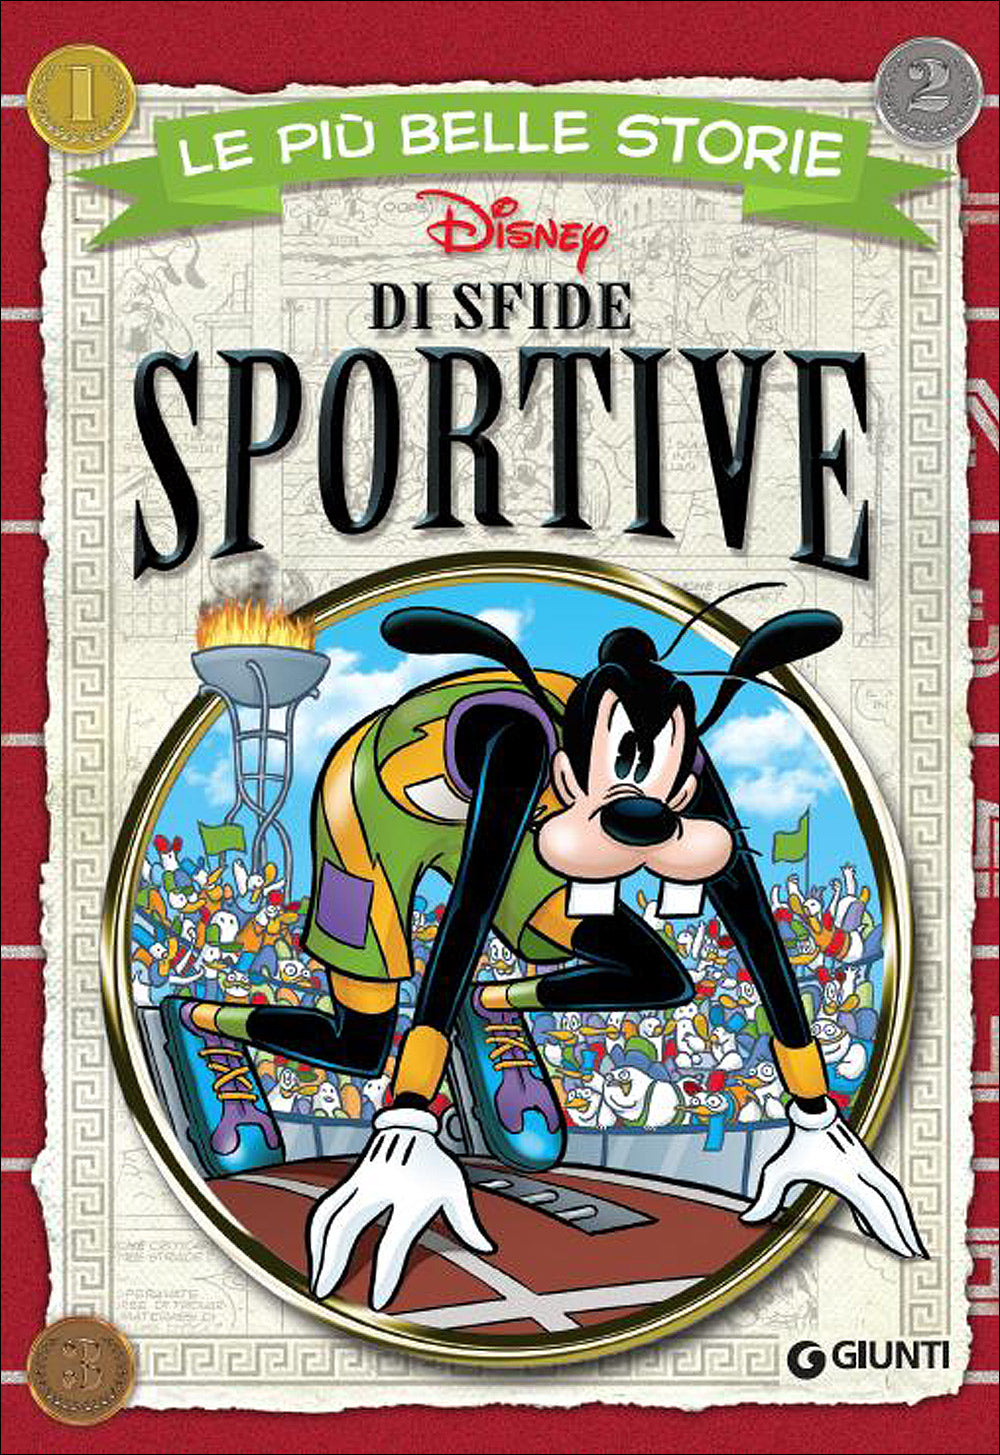 Le più belle storie di Sfide sportive, Walt Disney